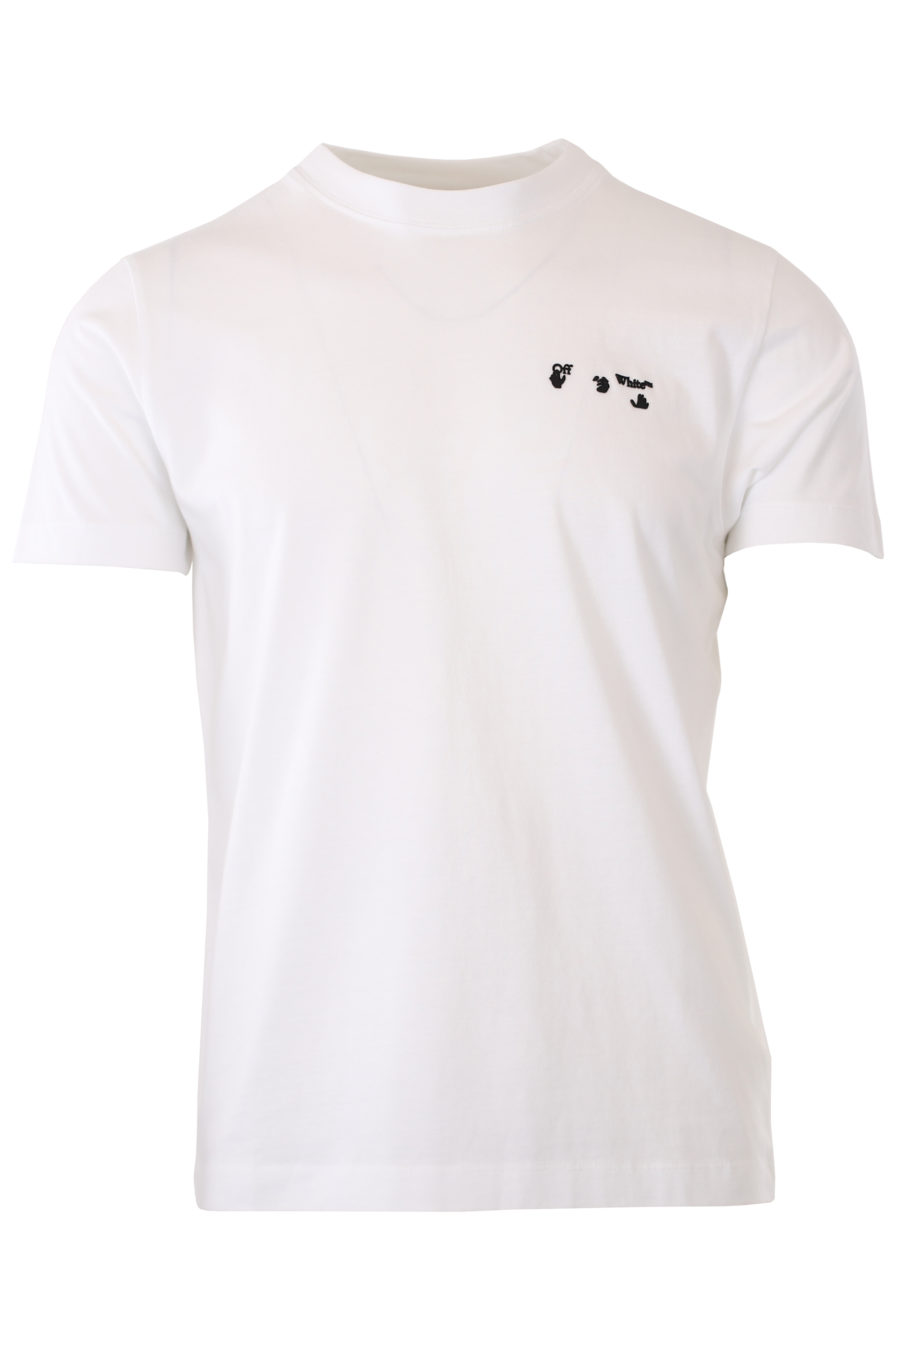 Camiseta blanca con logo pequeño en negro - IMG 2340